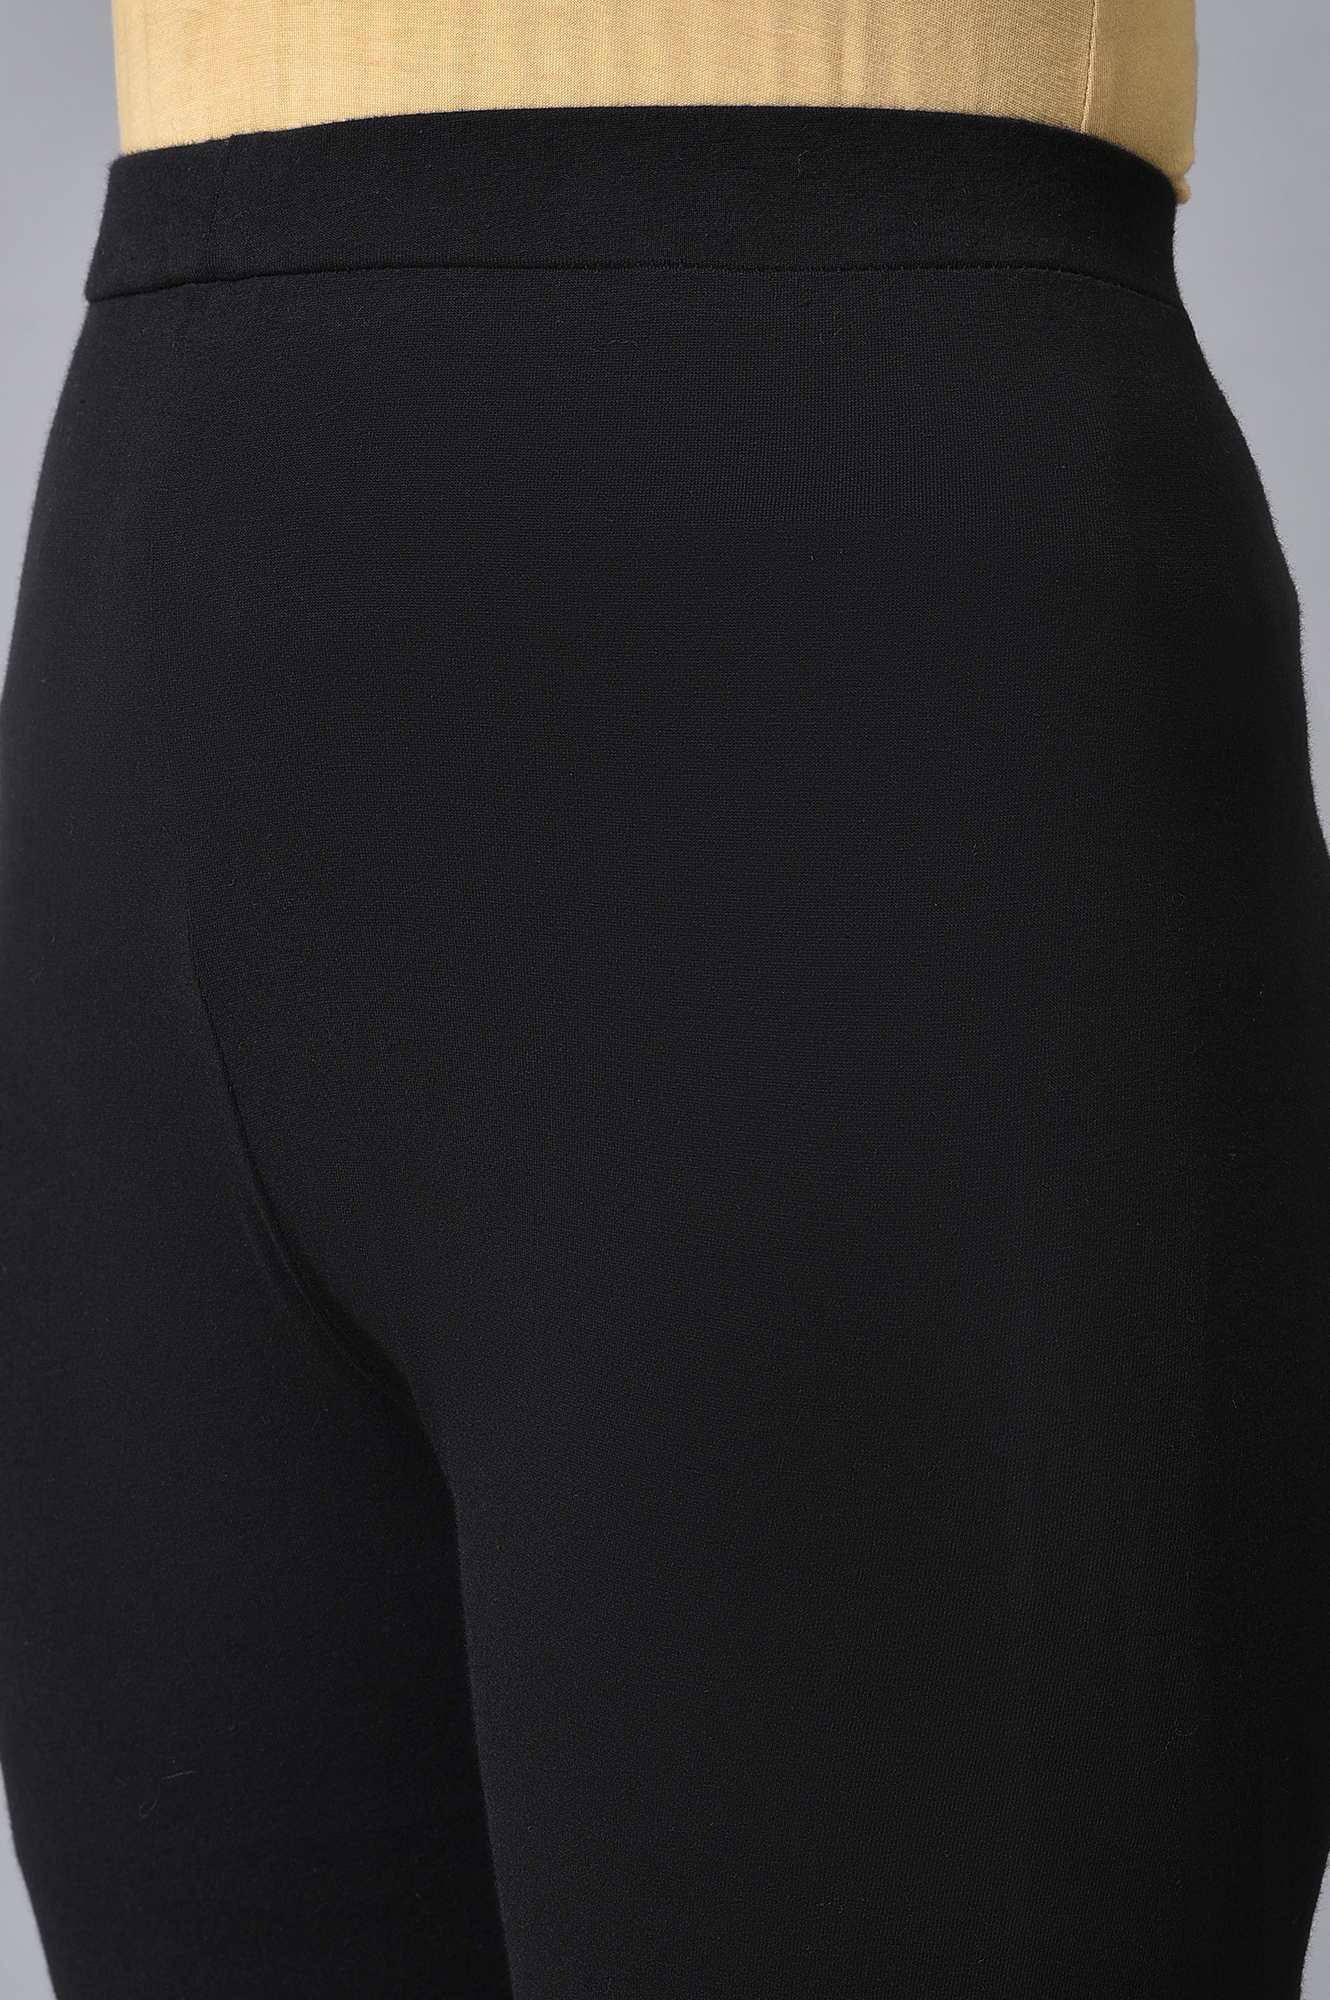 Black Embroidered Asymmetrical kurta Set - wforwoman